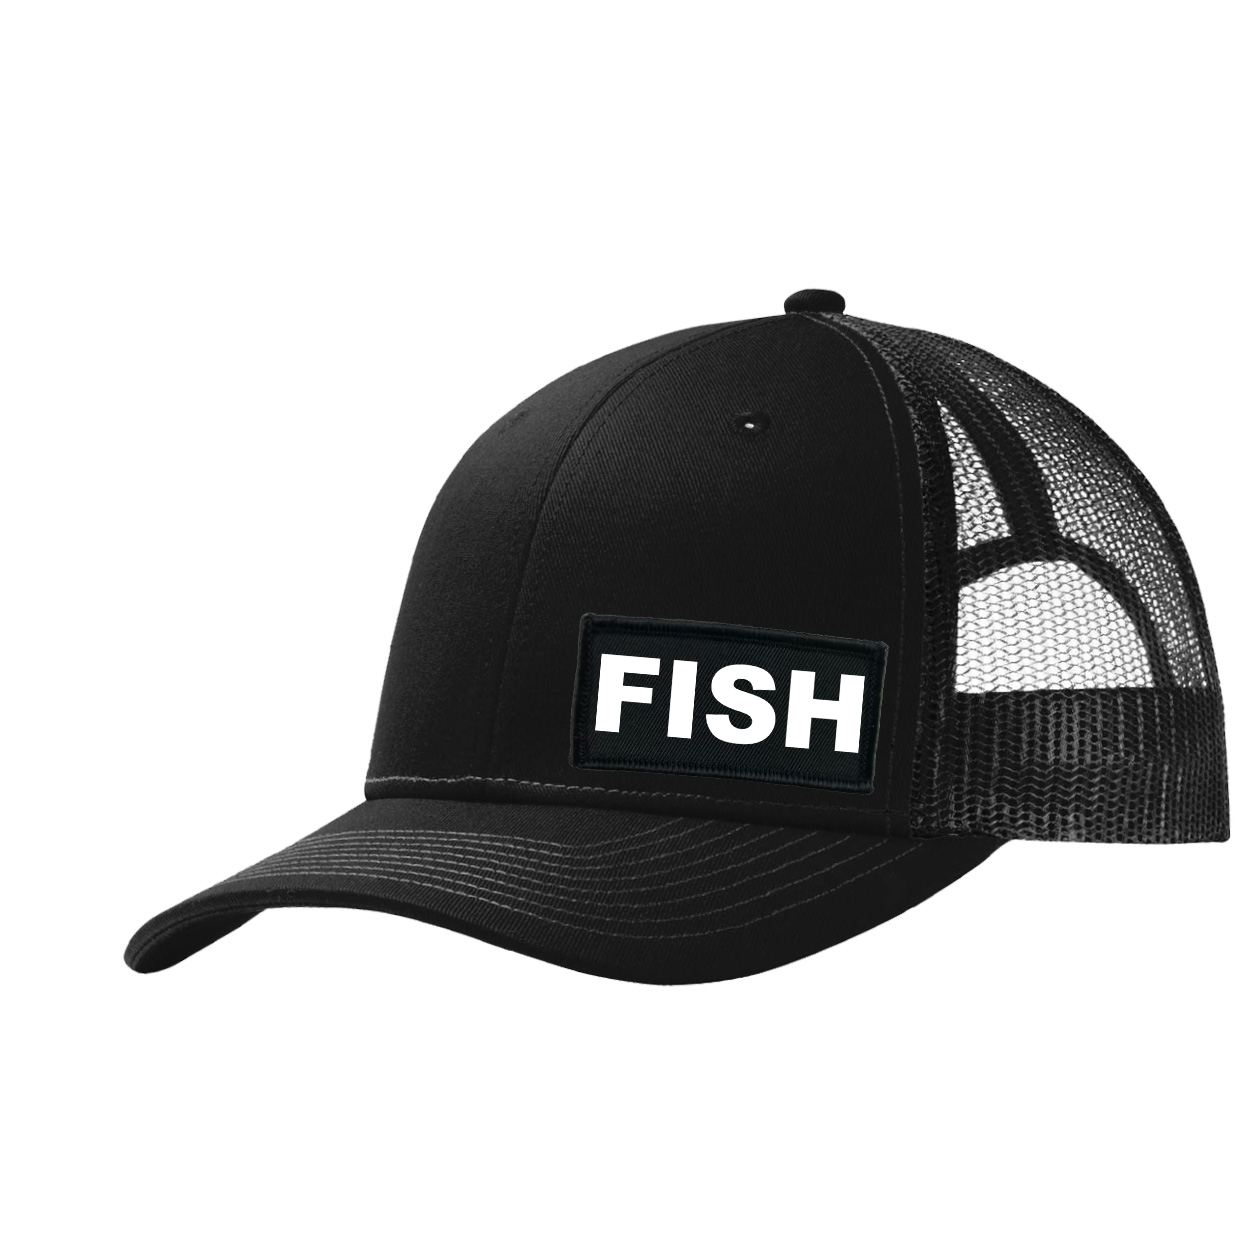 Fish Brand Logo Night Out Woven Patch Snapback Trucker Hat Black (White Logo)